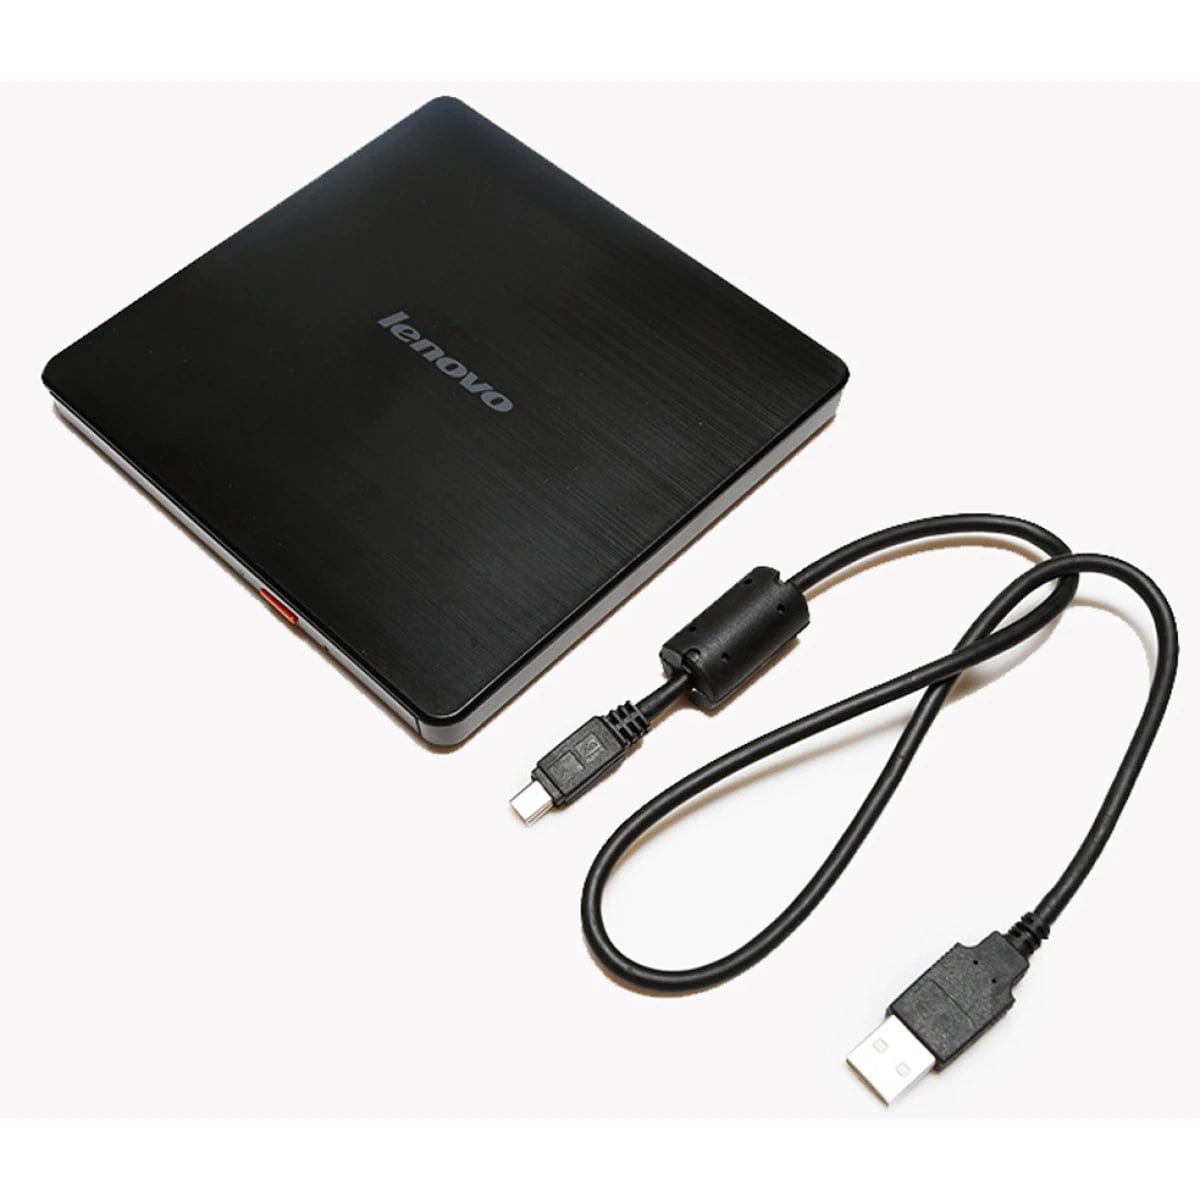 LENOVO Lenovo Slim DVD Burner DB65 DVD±RW (±R DL) External Drive USB 2.0 888015471